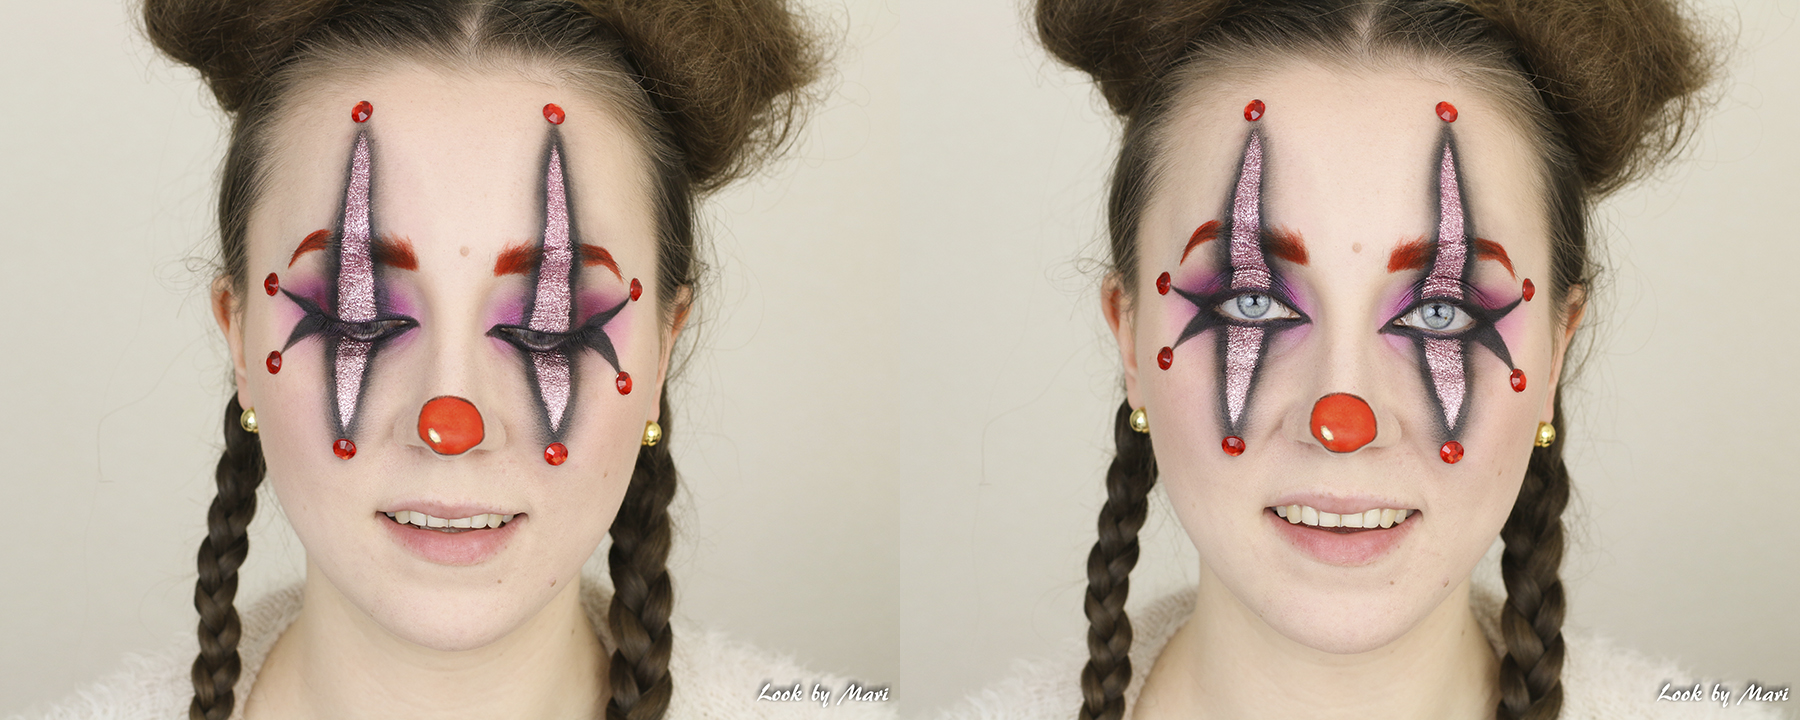 13 clown face makeup tutorial inspo easy for beginners blog video